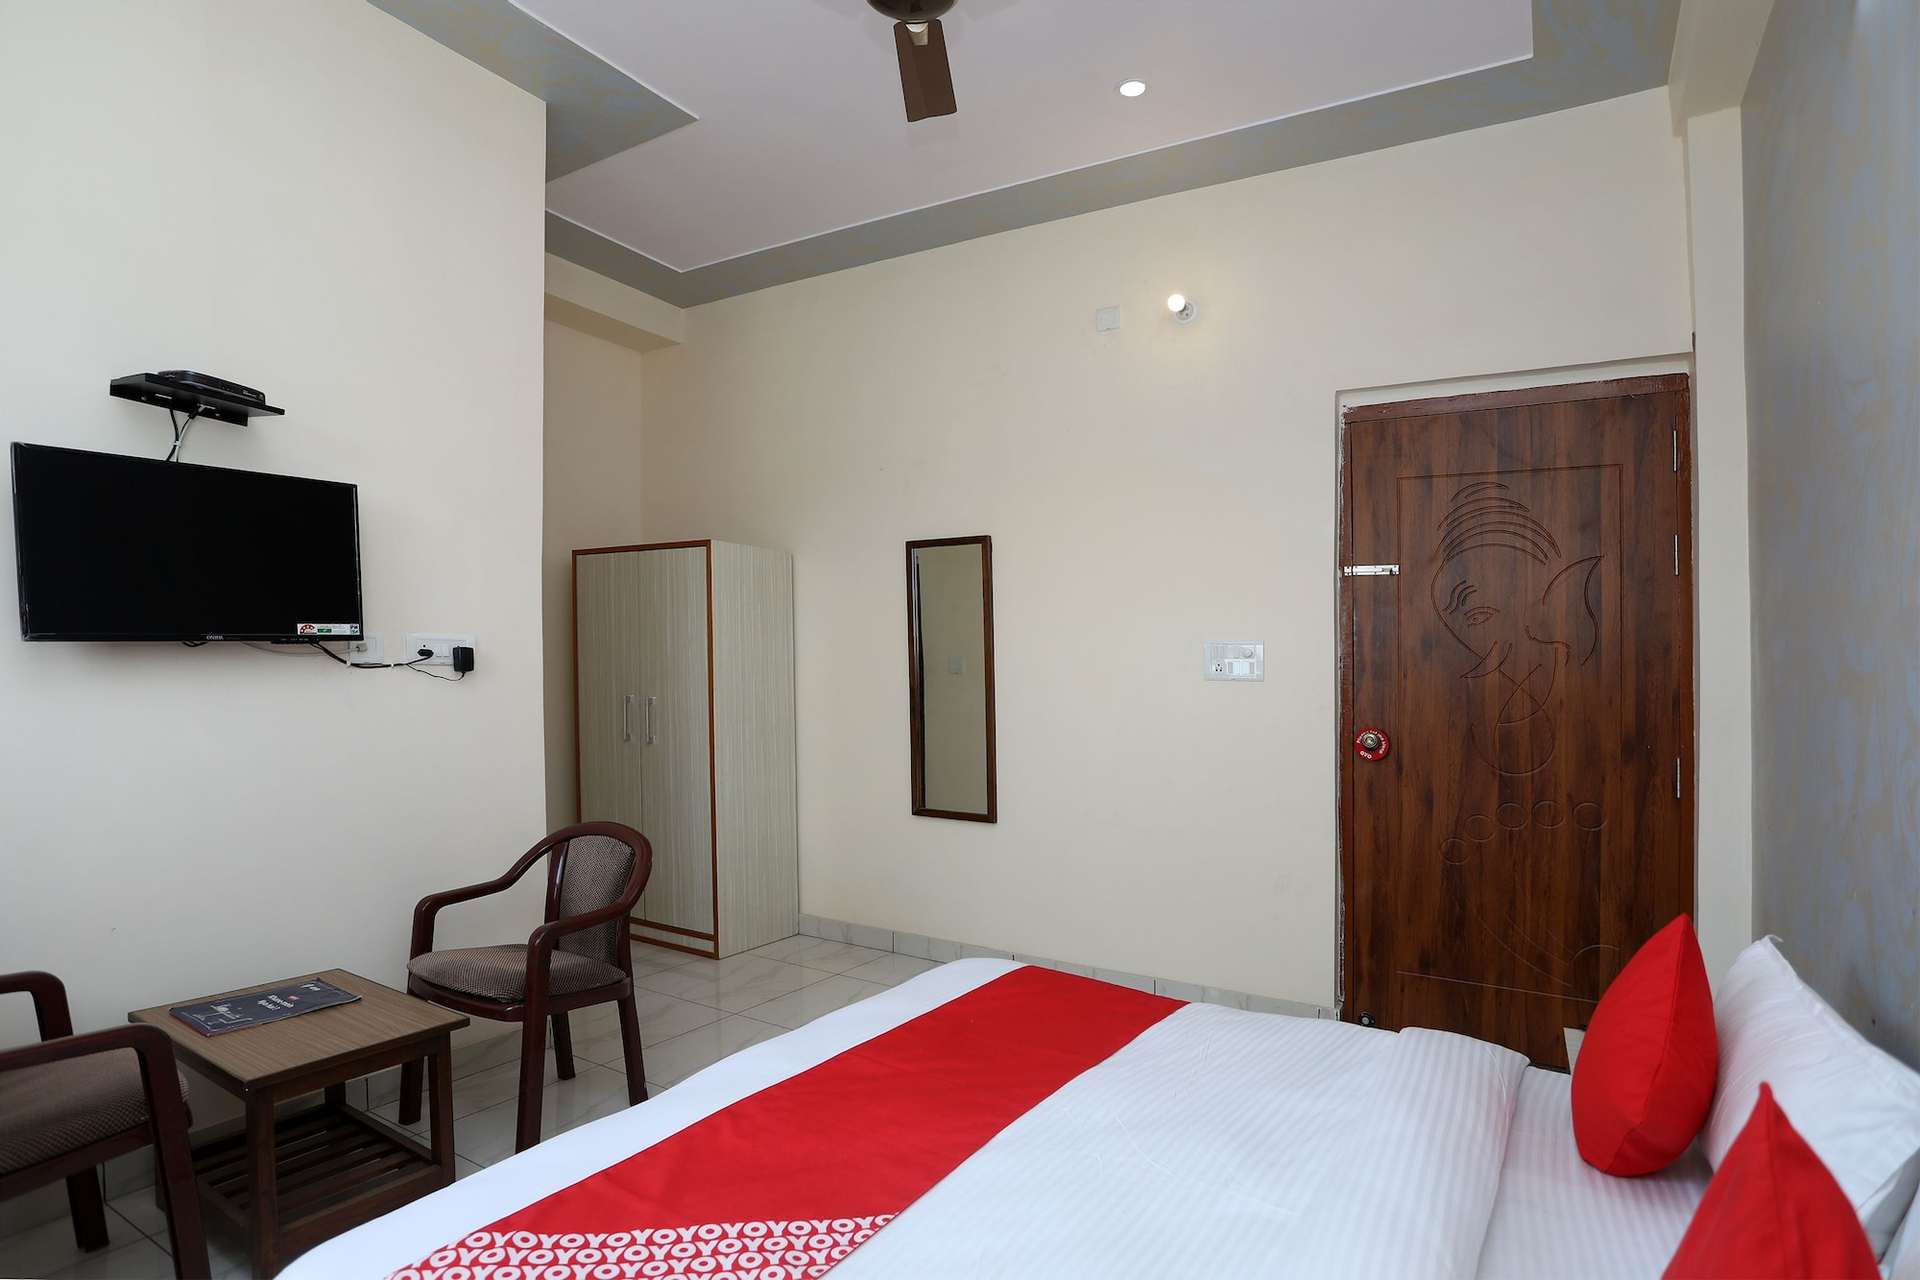 Bedroom 3, OYO 17291 Shree Ram Palace, Rewari